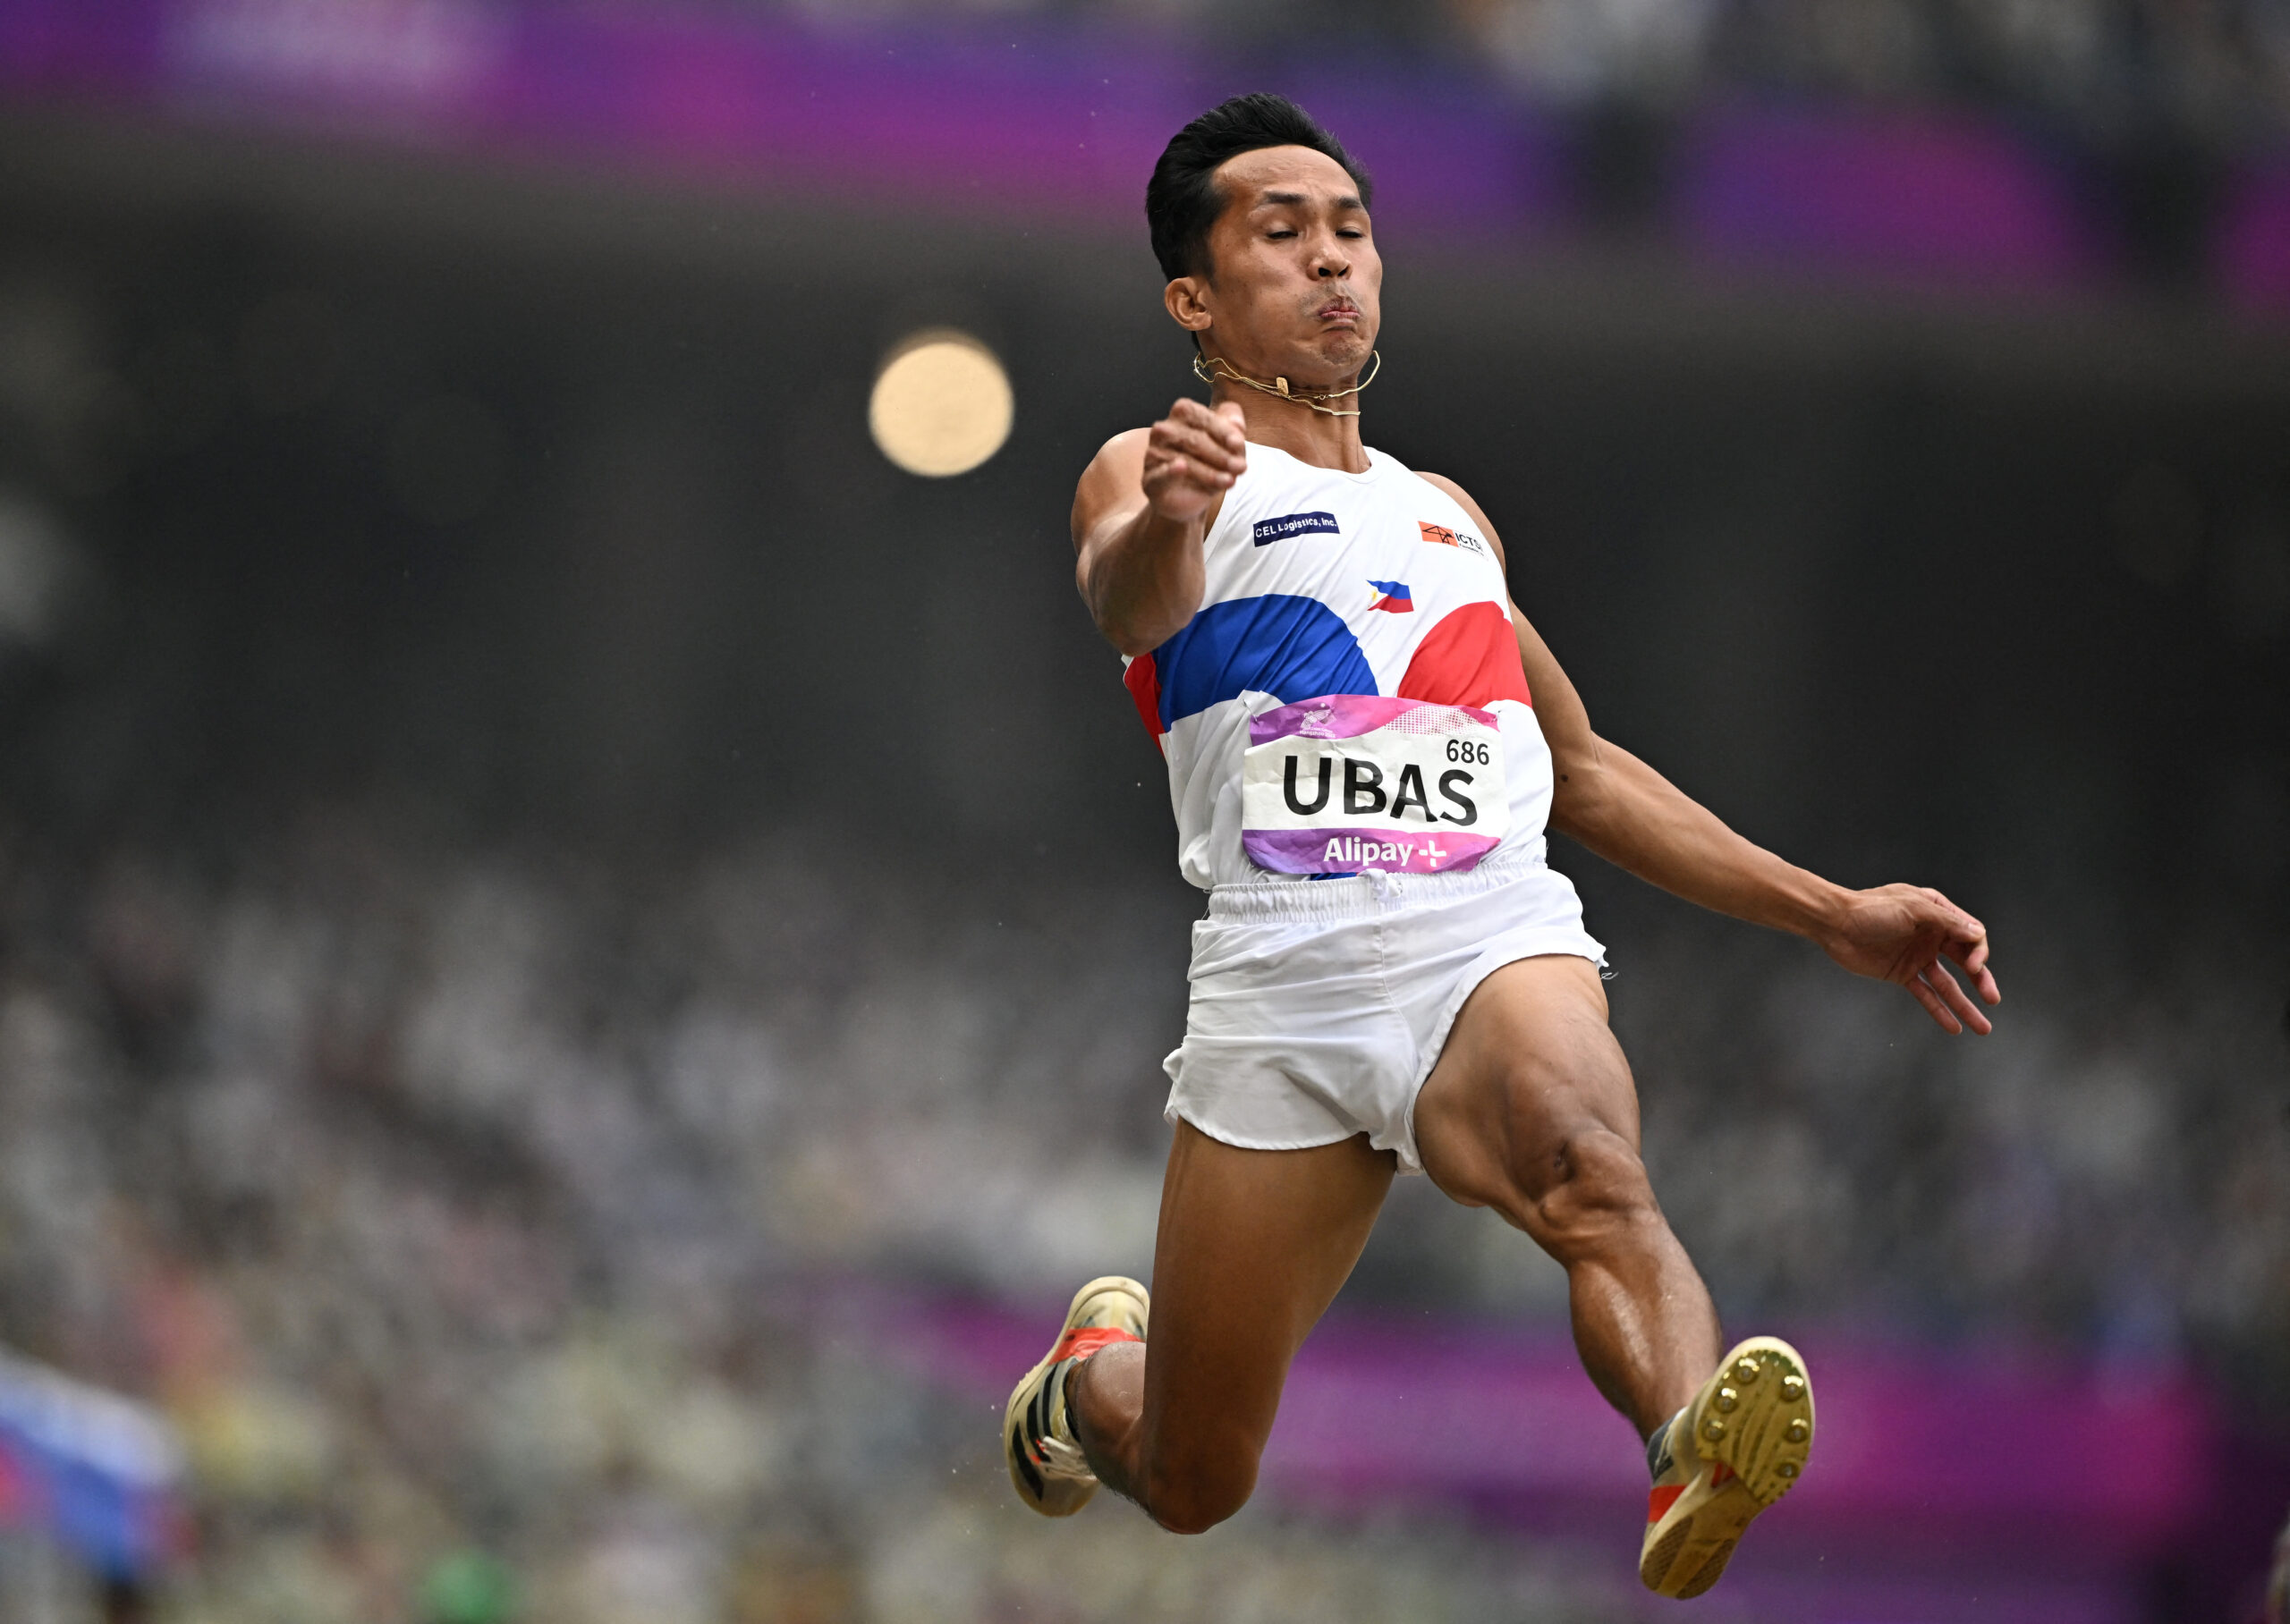 Janry Ubas Paris Olympics long jump